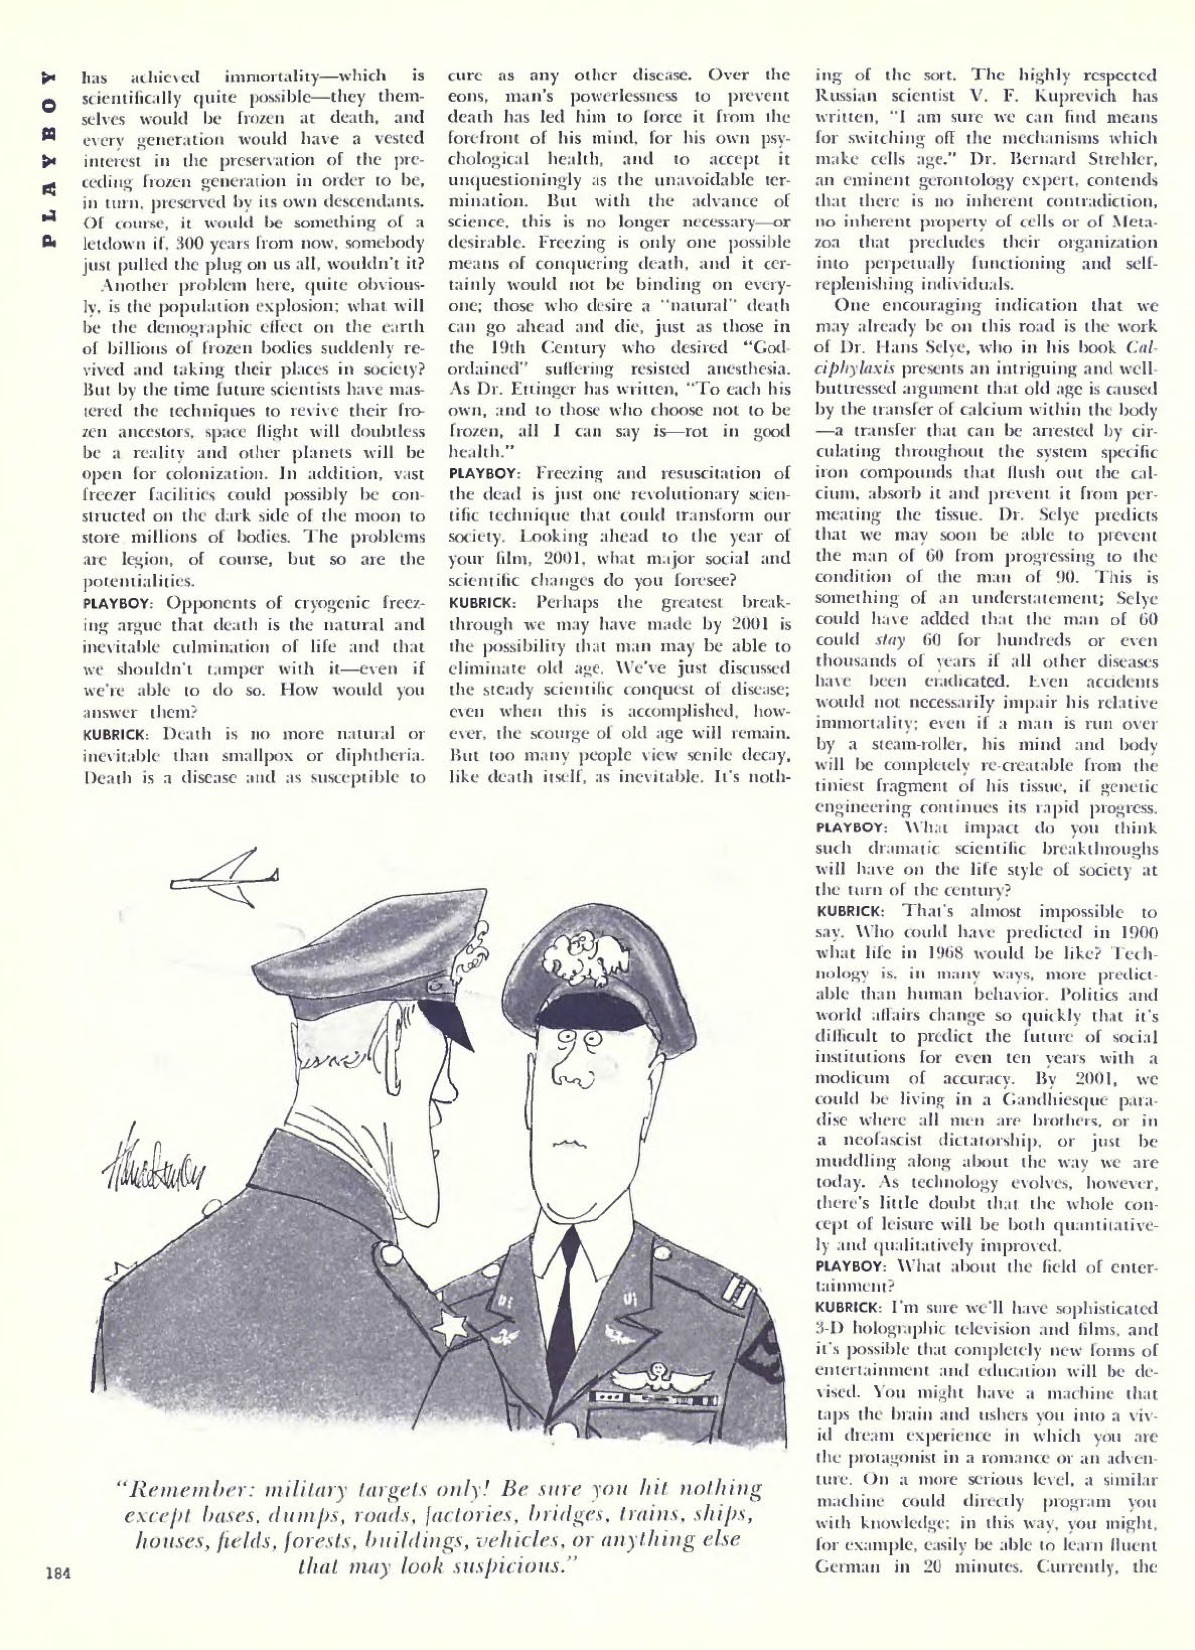 Playboy stanley kubrick 1968 interview